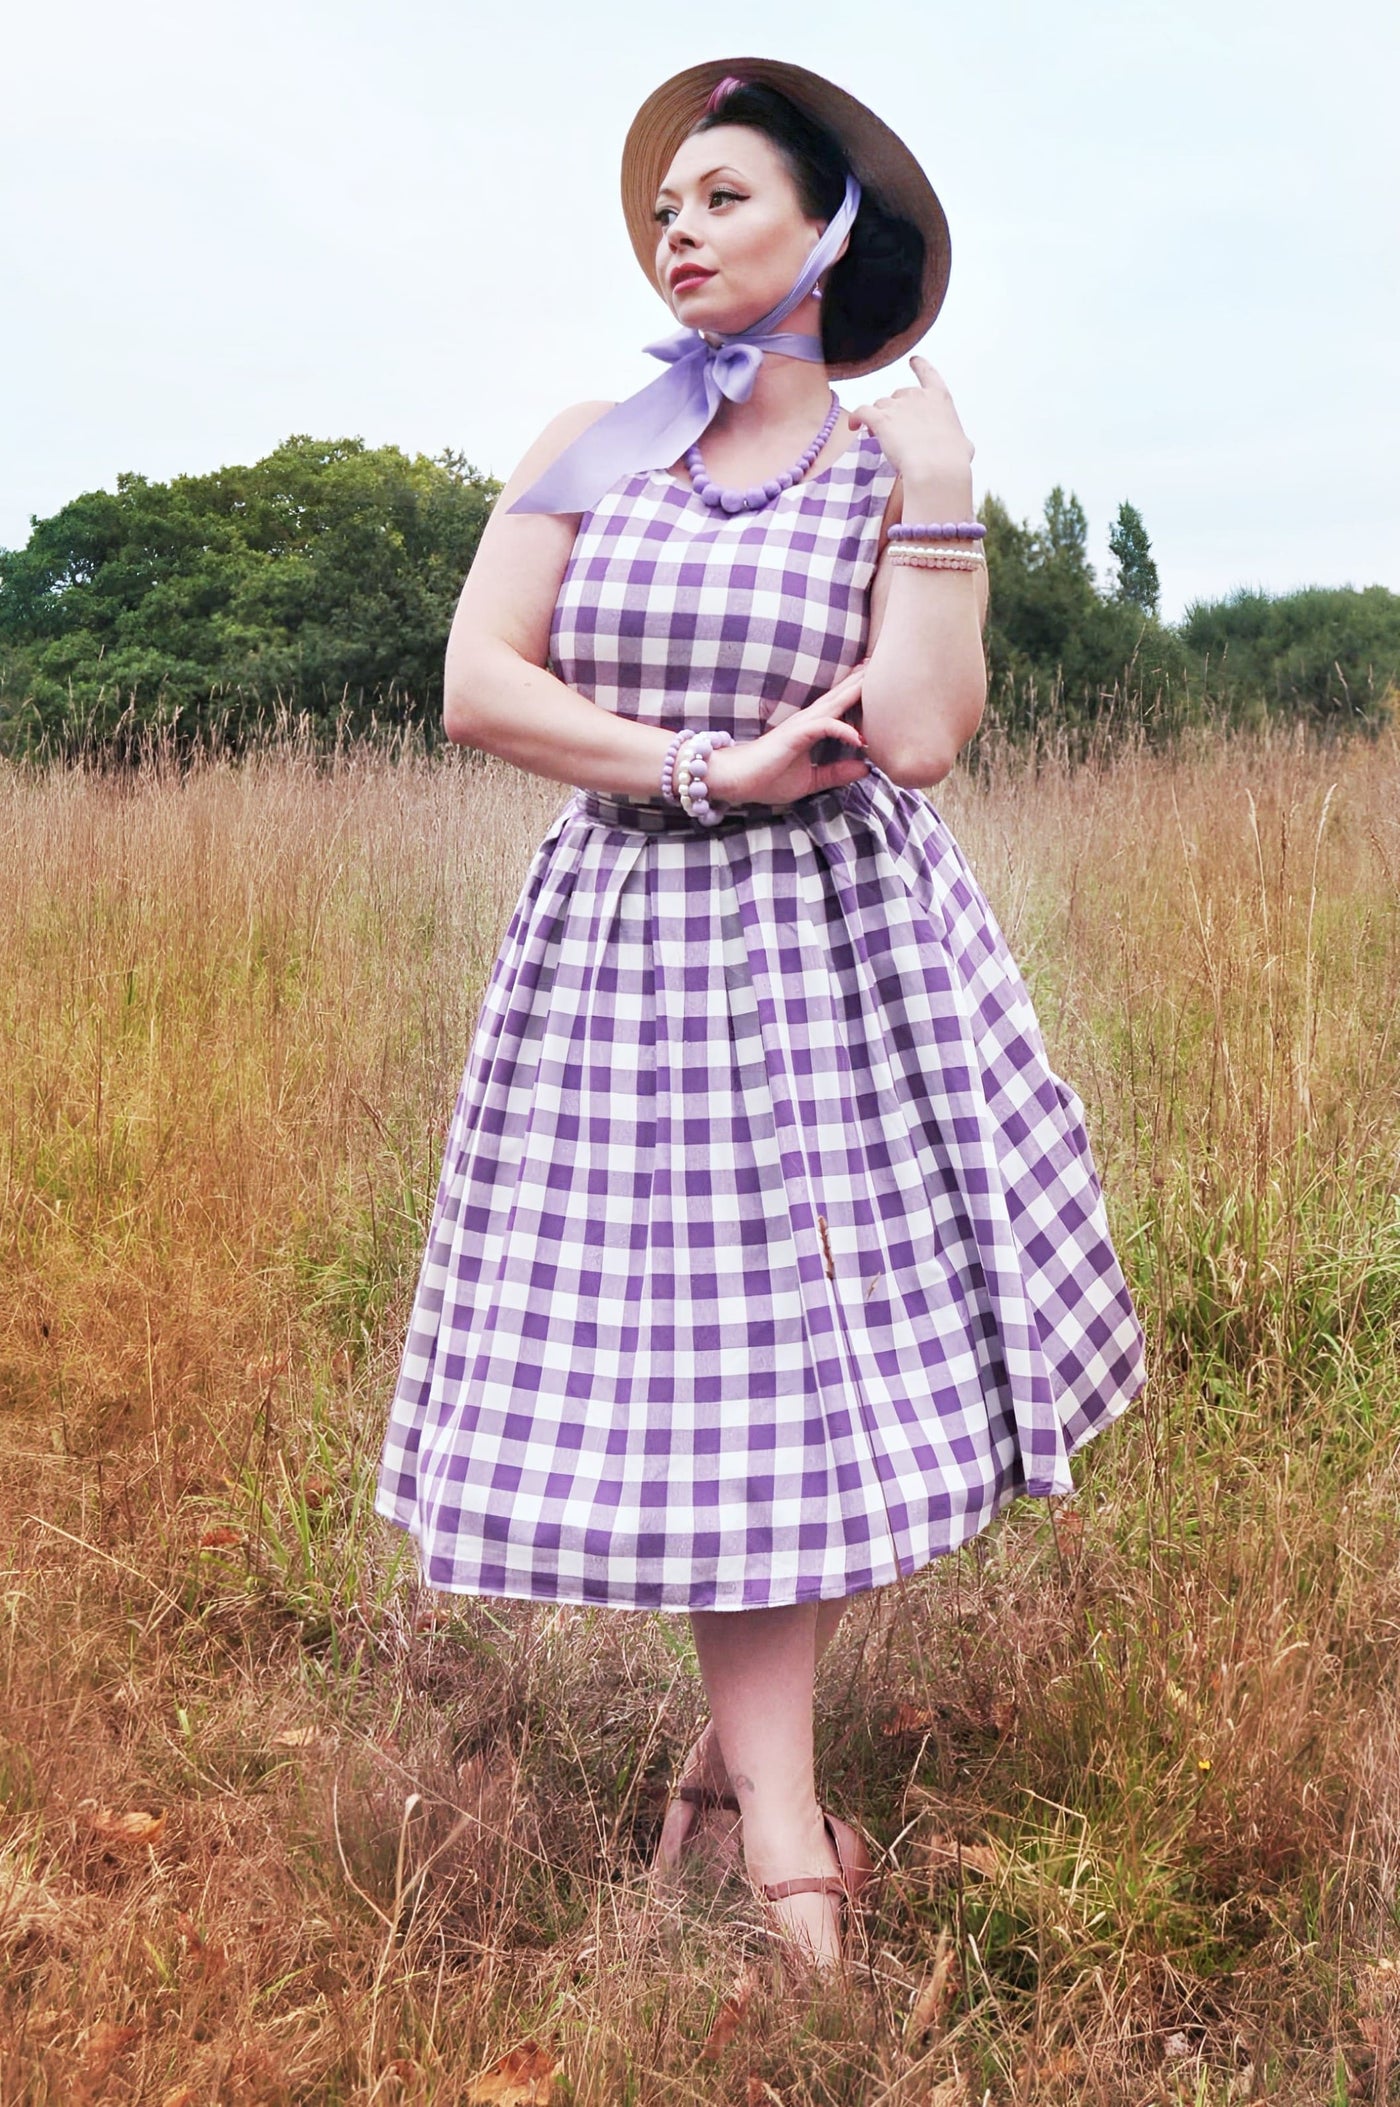 missbunnyceline wearing Vintage Inspired Purple Gingham Swing Dress at the field